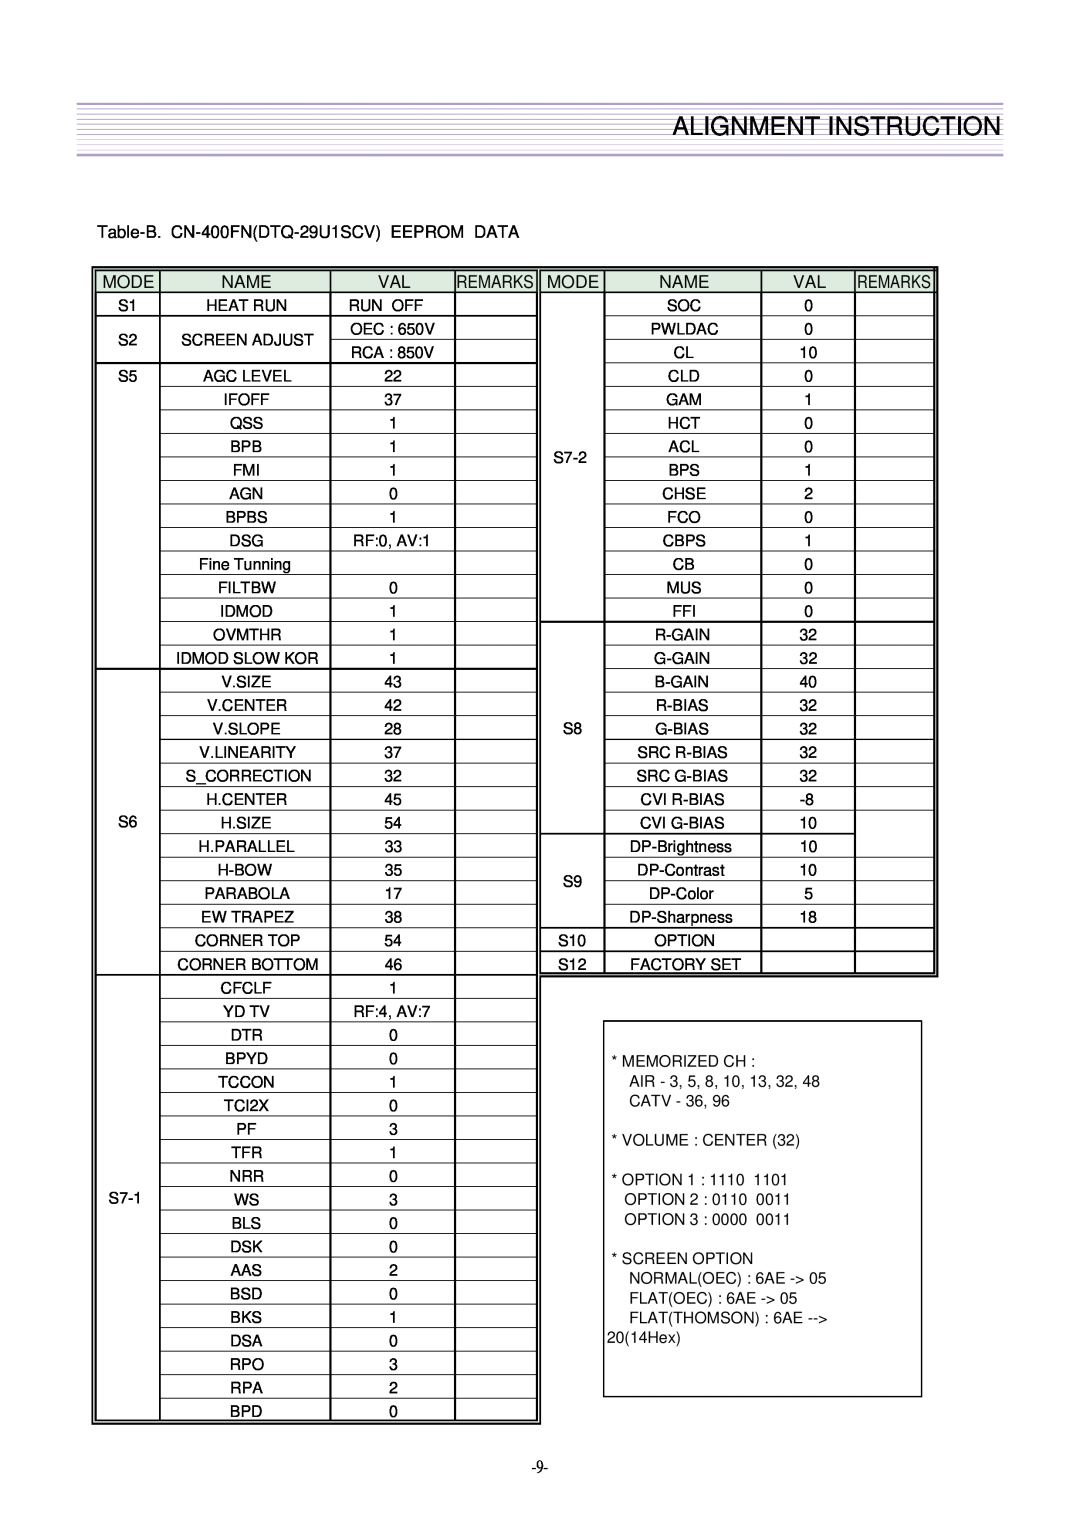 Daewoo CN-401FN, DTQ-29U4SCV, DTQ-29U5SSFV Alignment Instruction, Table-B. CN-400FNDTQ-29U1SCV EEPROM DATA, Mode, Name 